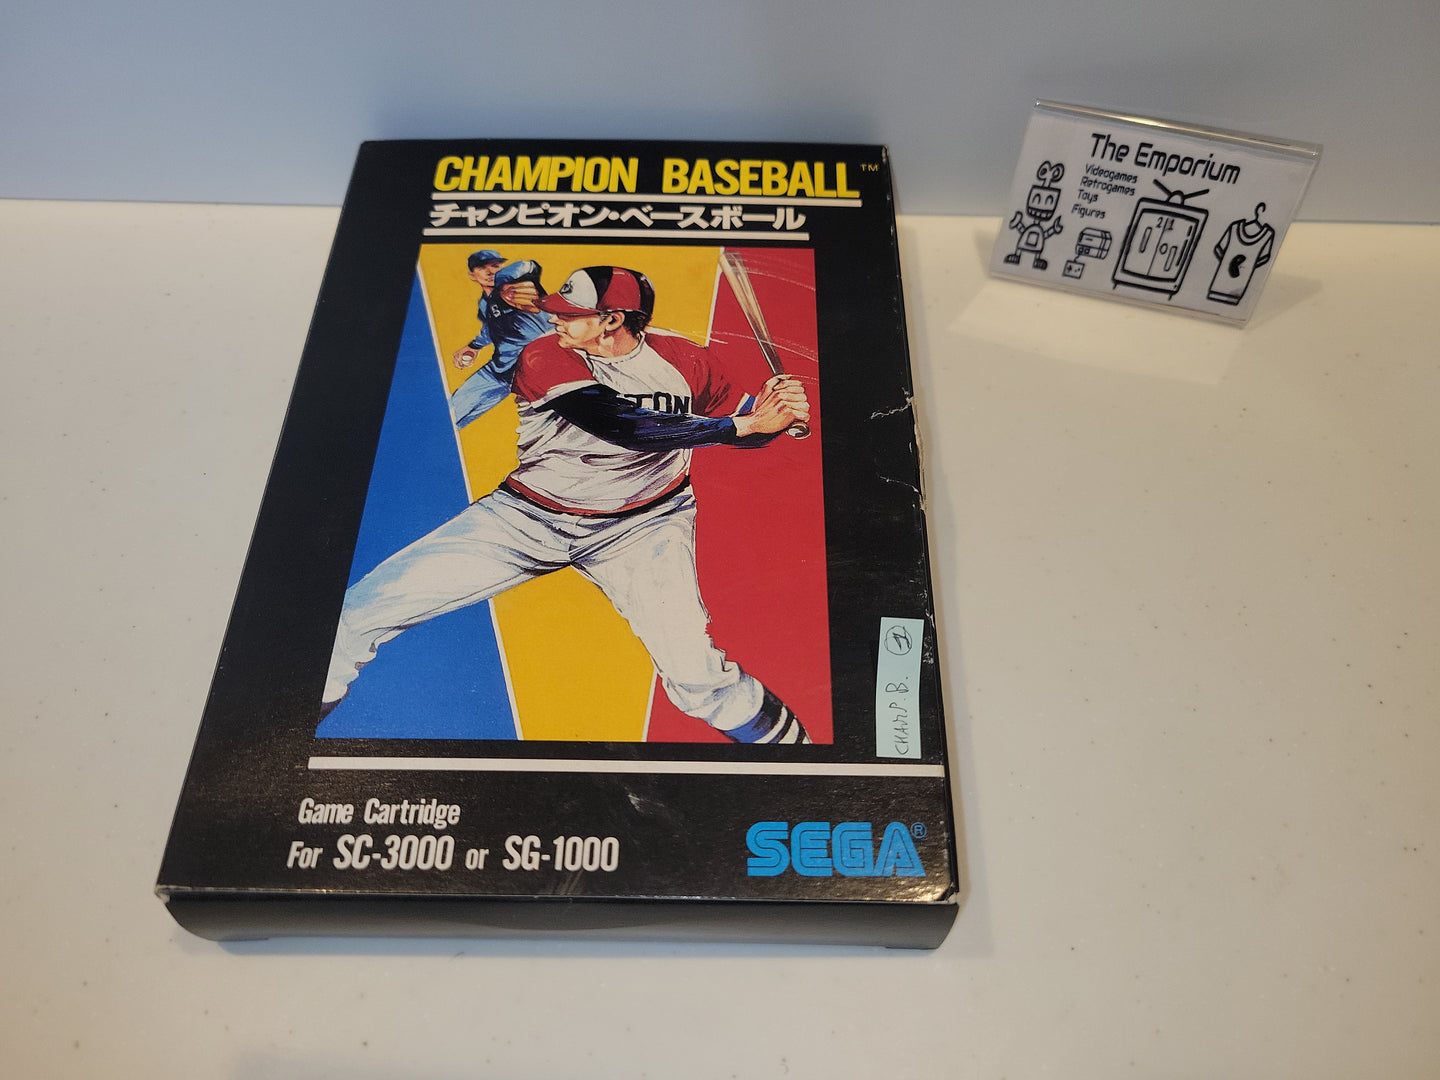 Championship Baseball - Sega mark sg1000